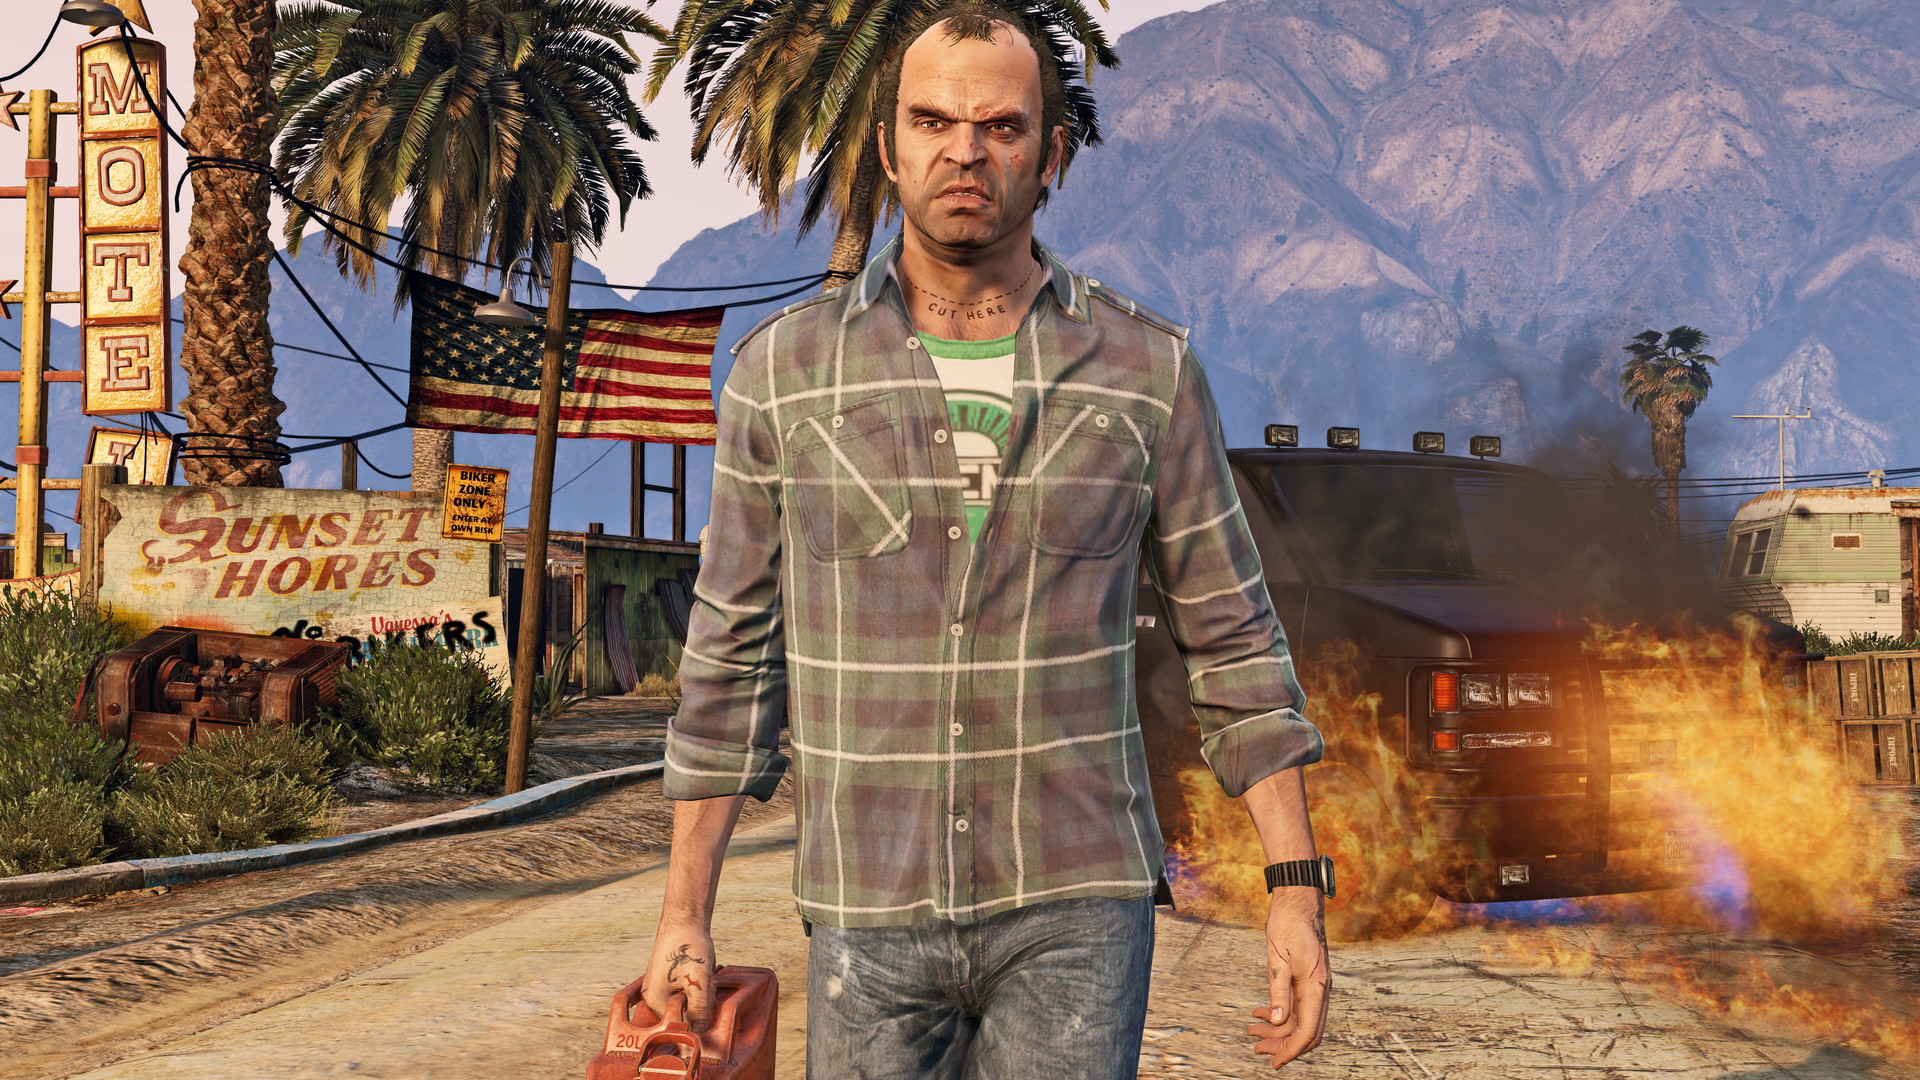 Game: Grand Theft Auto V Series Review